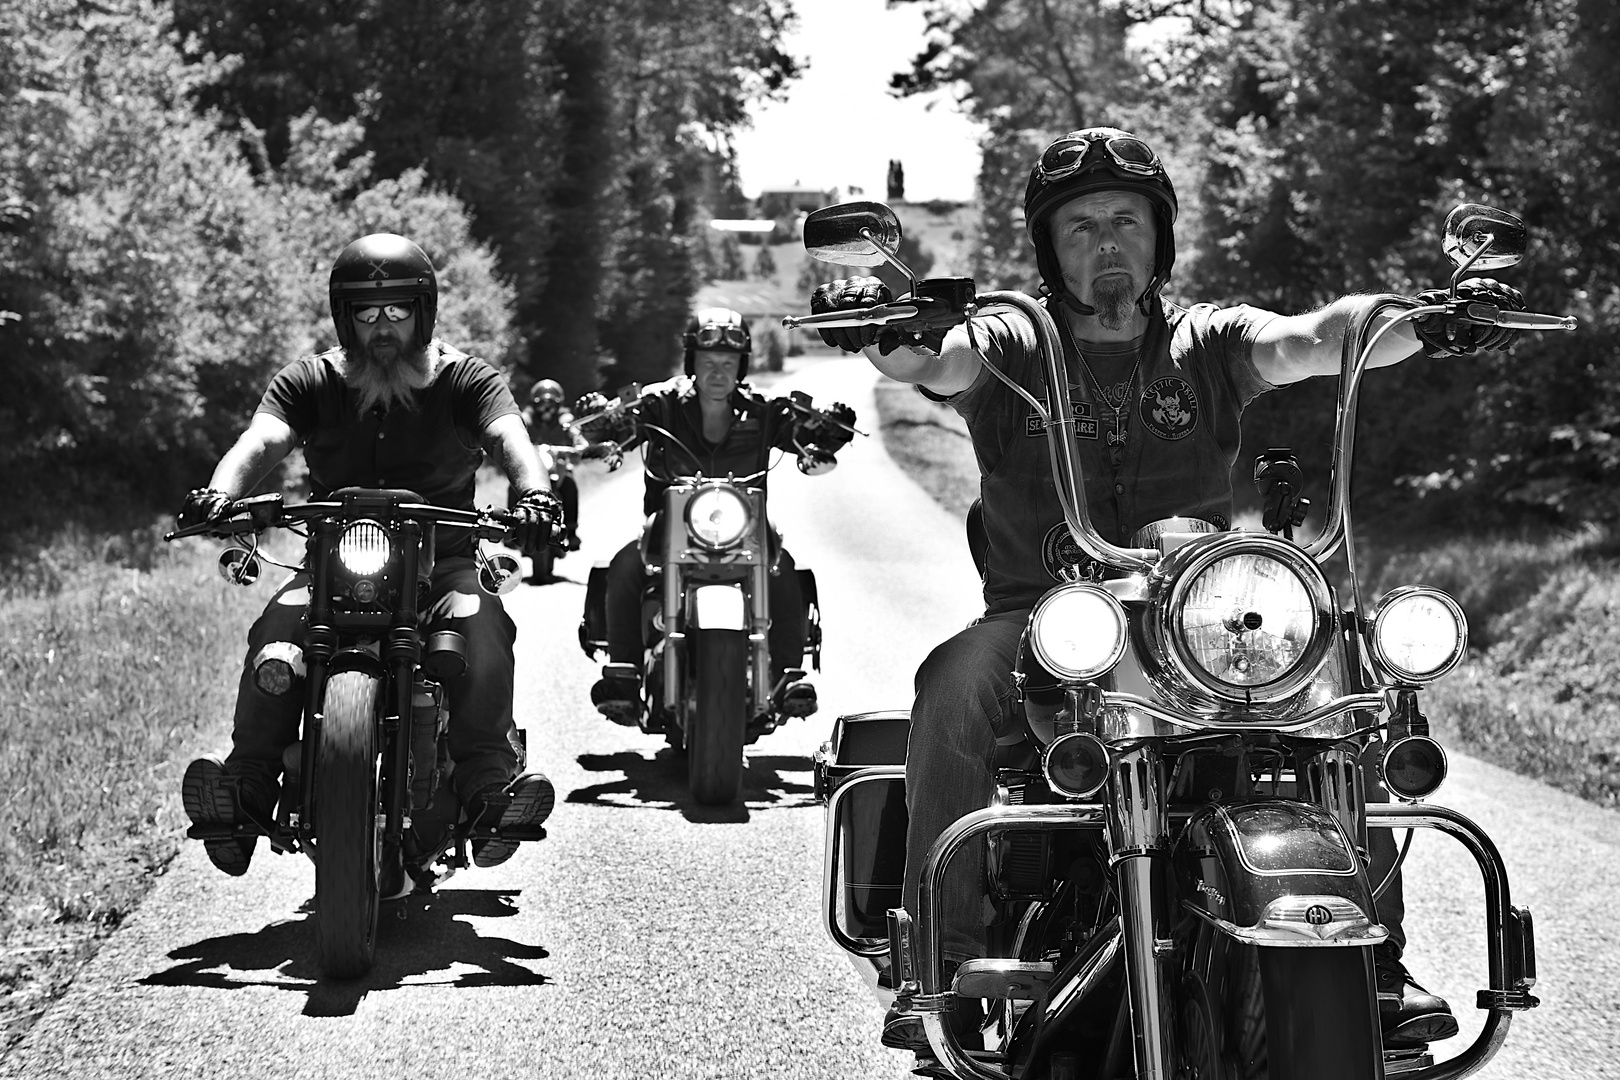 Serie bikers